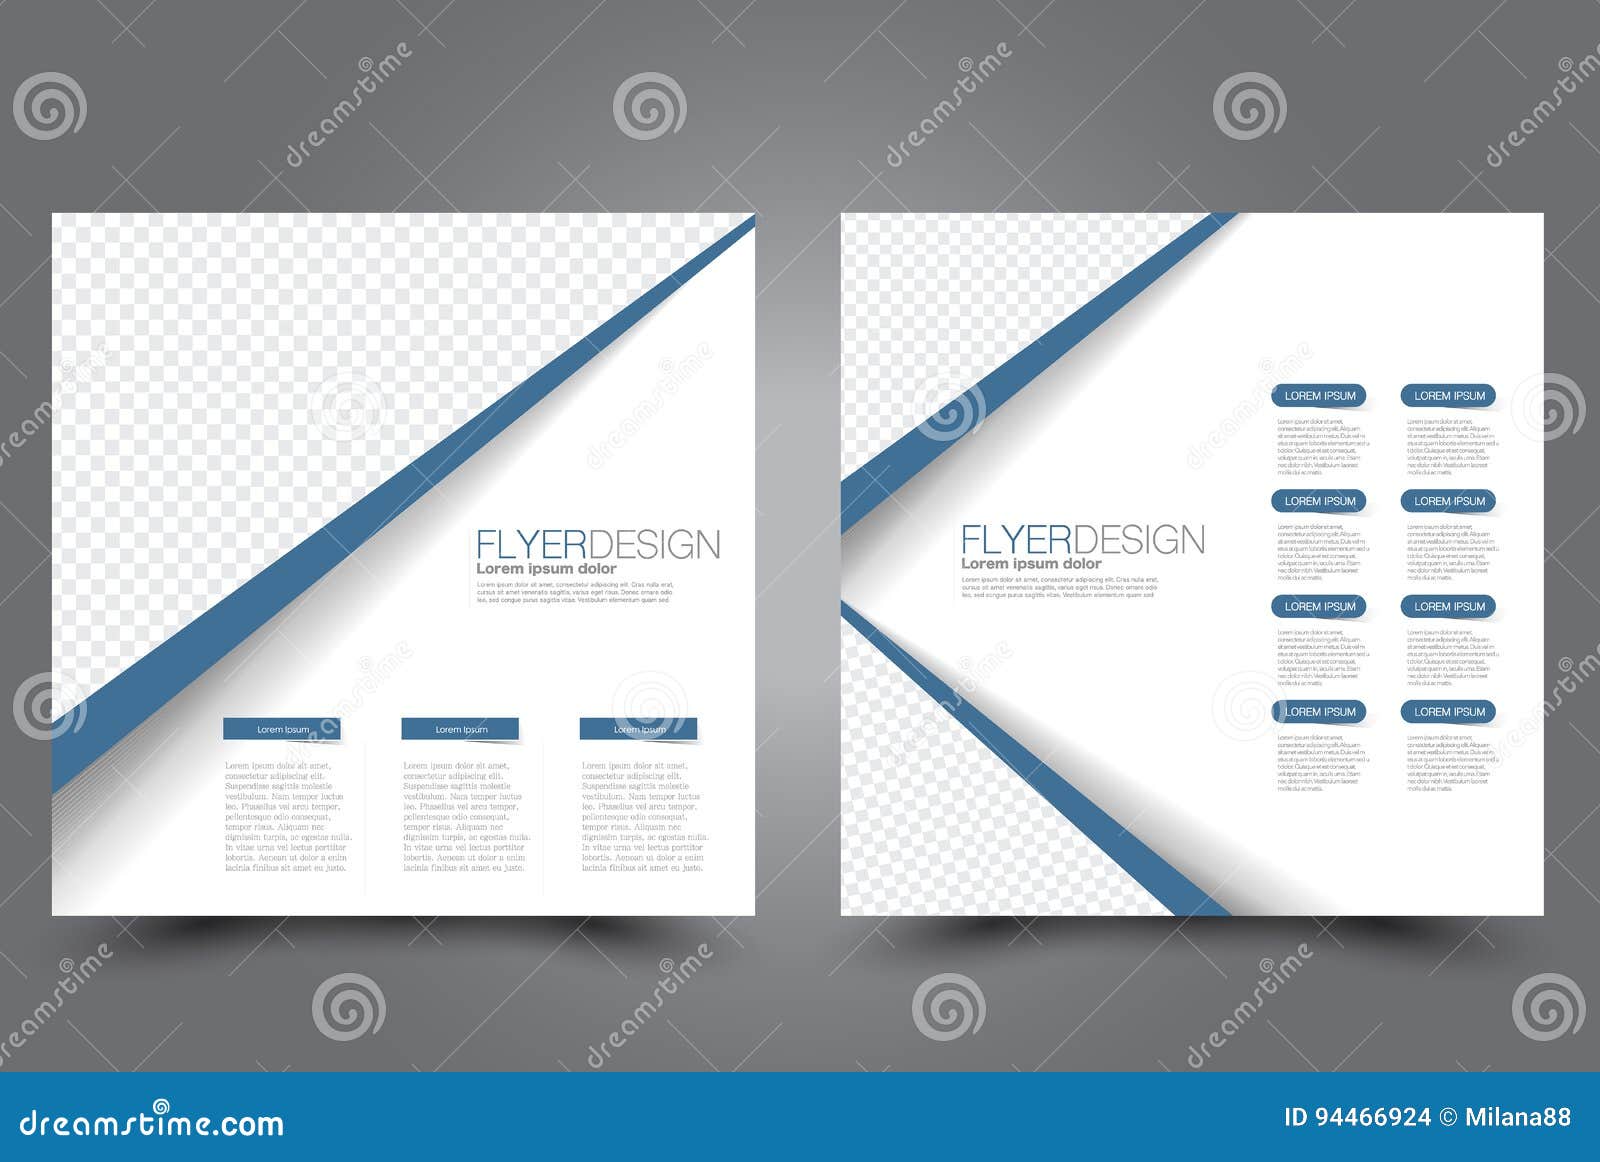 Square flyer template. Brochure design